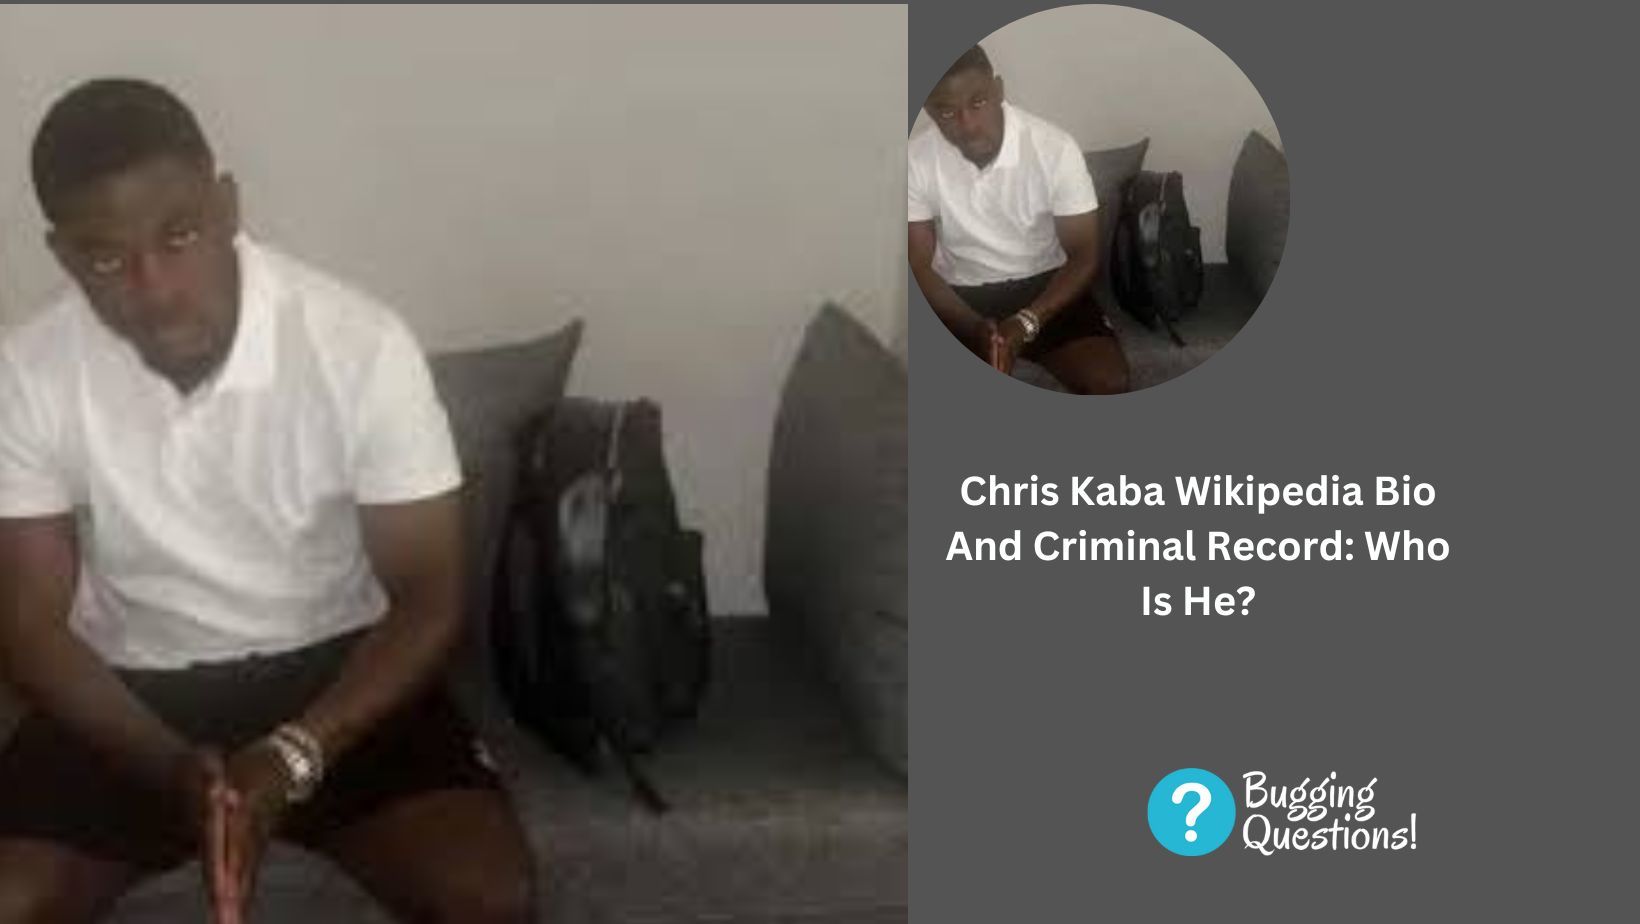 Chris Kaba Wikipedia Bio And Criminal Record: Who Is He?